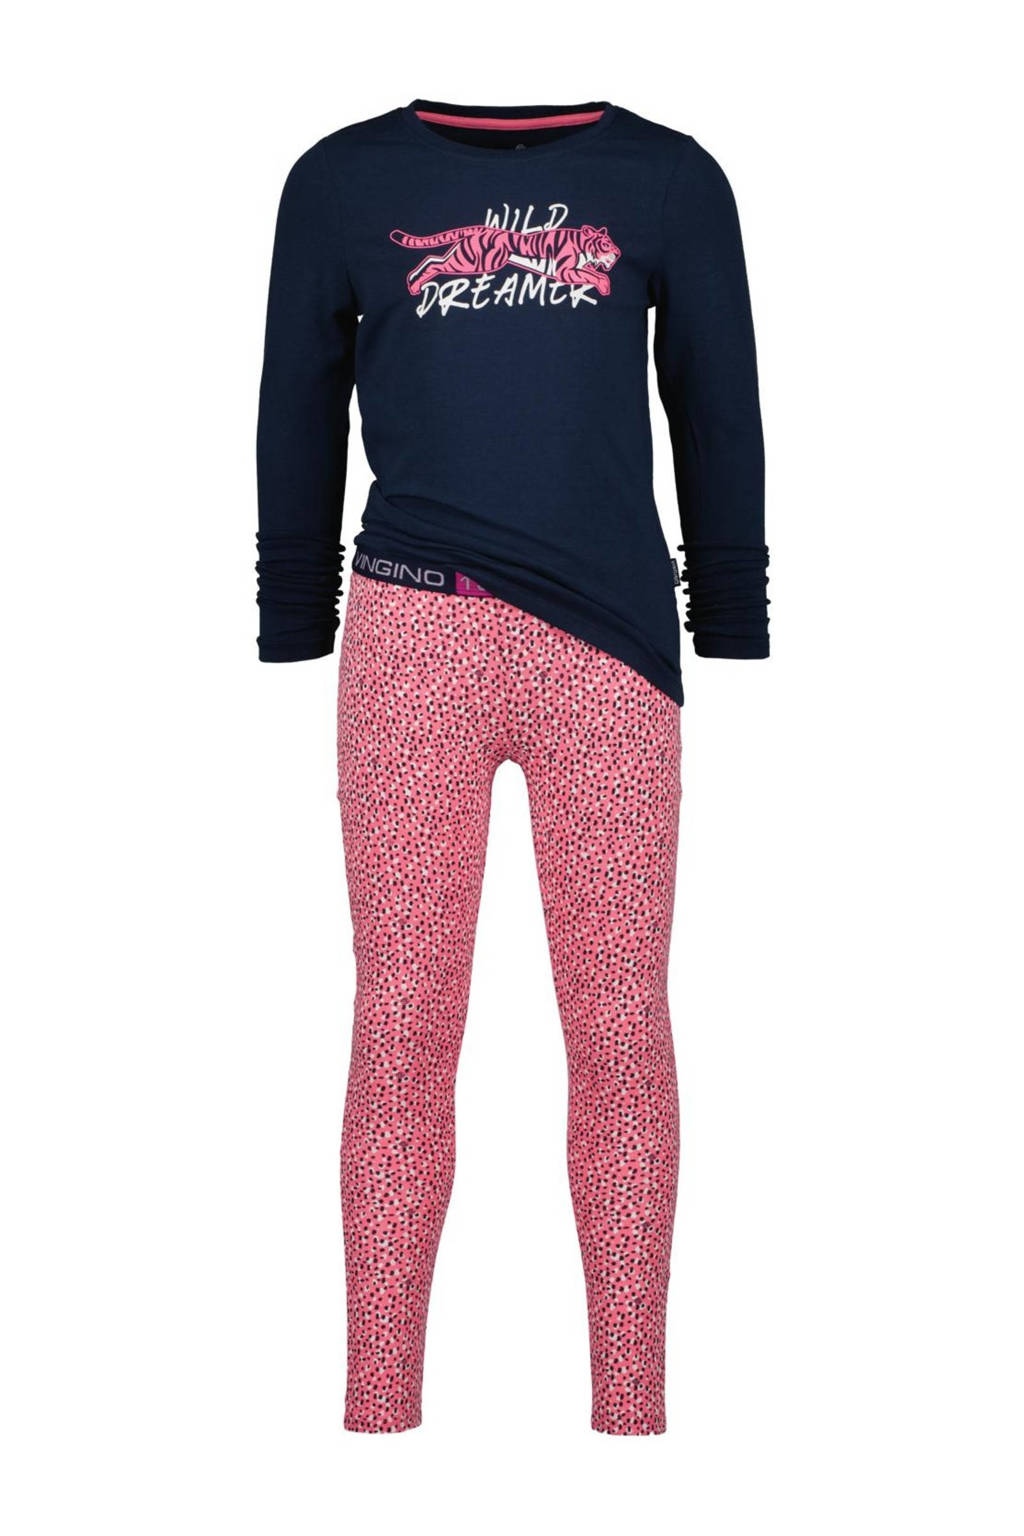 Vingino pyjama Wina met all over print roze/donkerblauw, Roze/donkerblauw